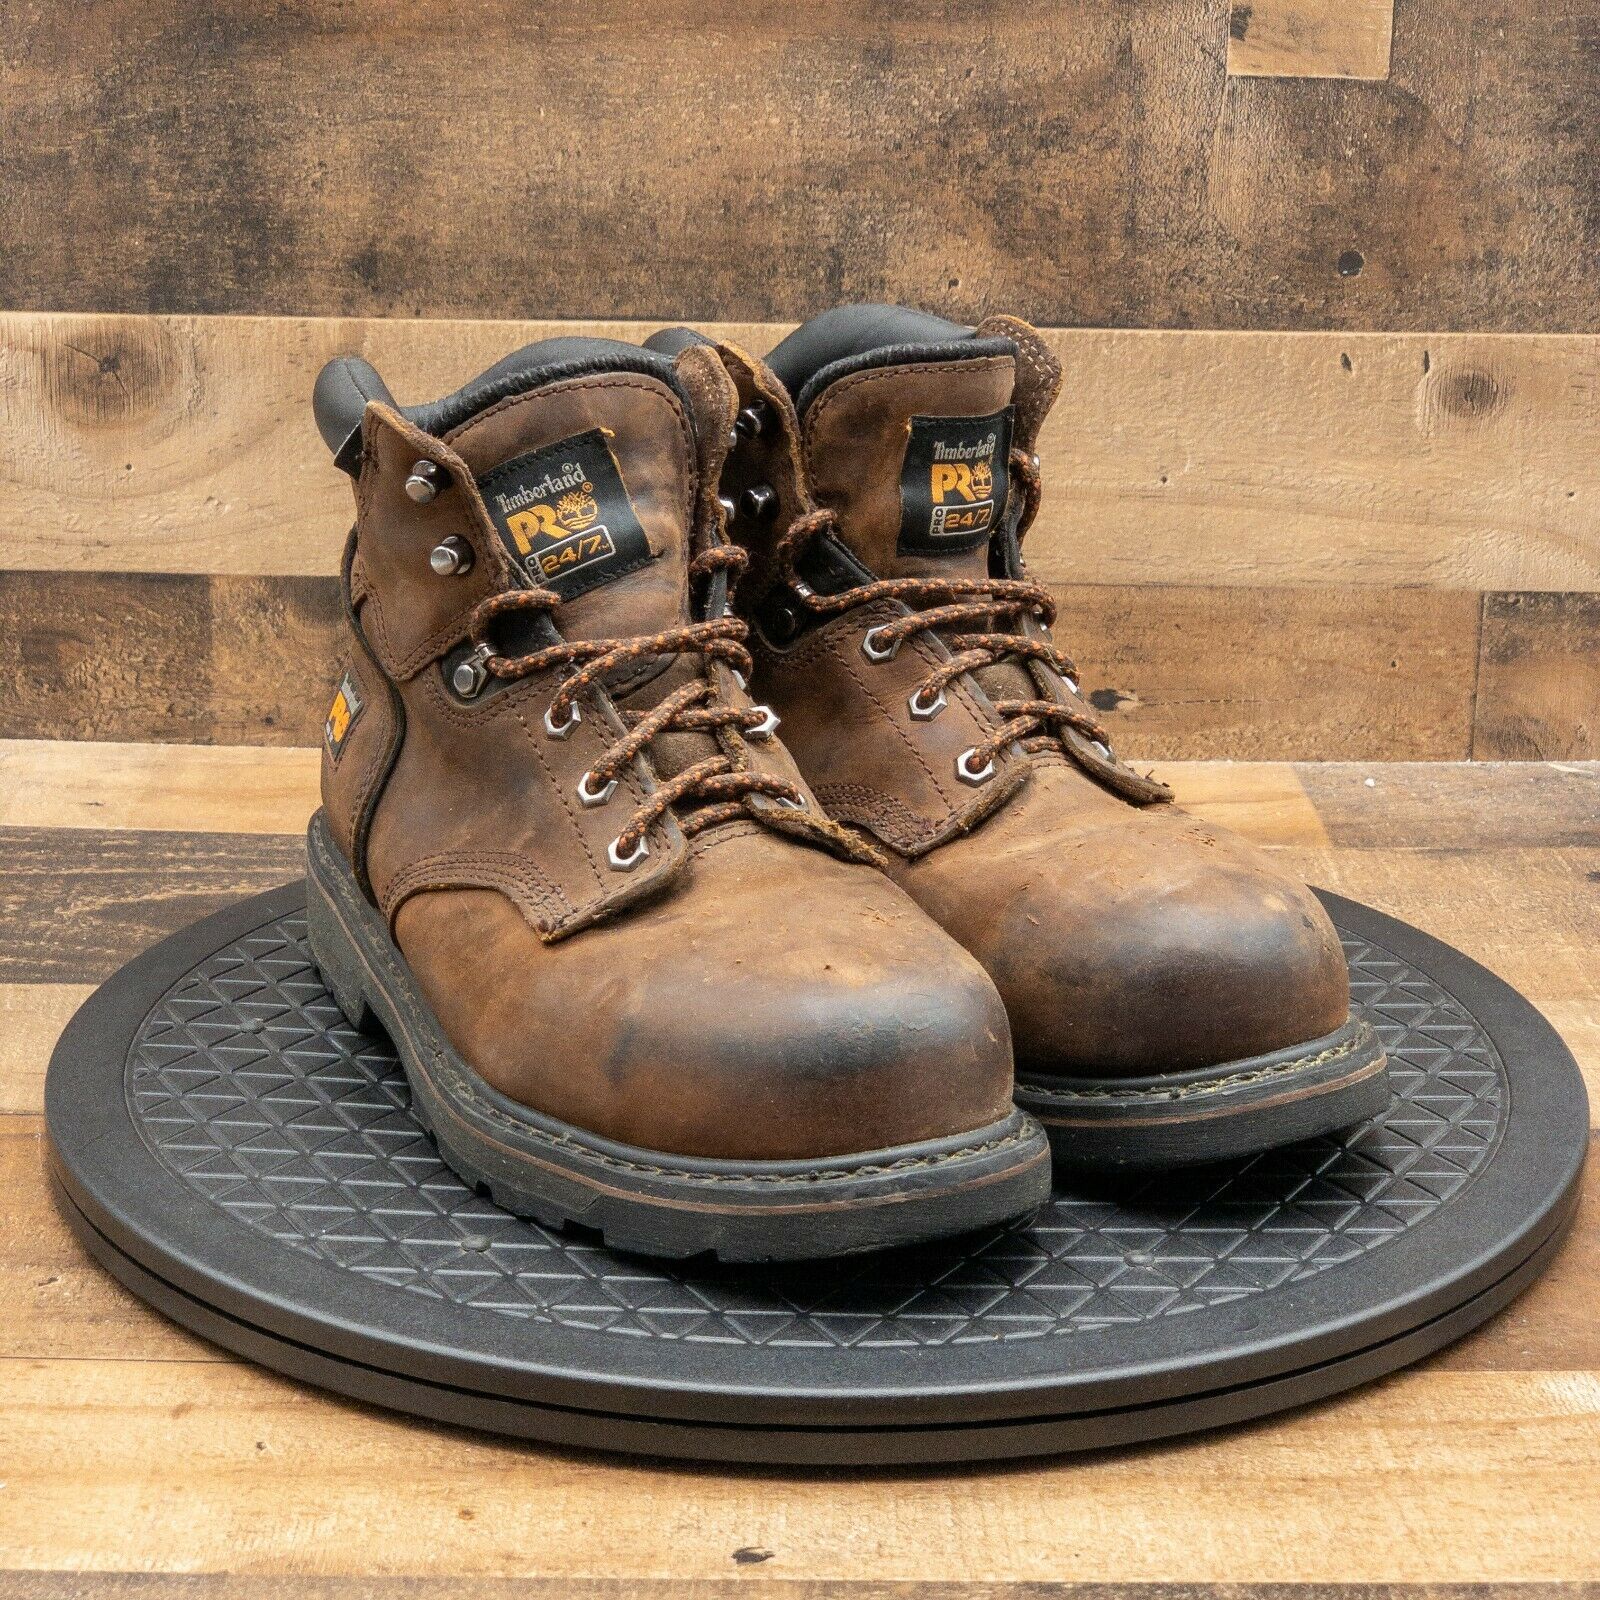 Timberland Pro 24/7 Men's Hiking Boots Walking Comfort Steel Toe Brown Sz 10.5 M